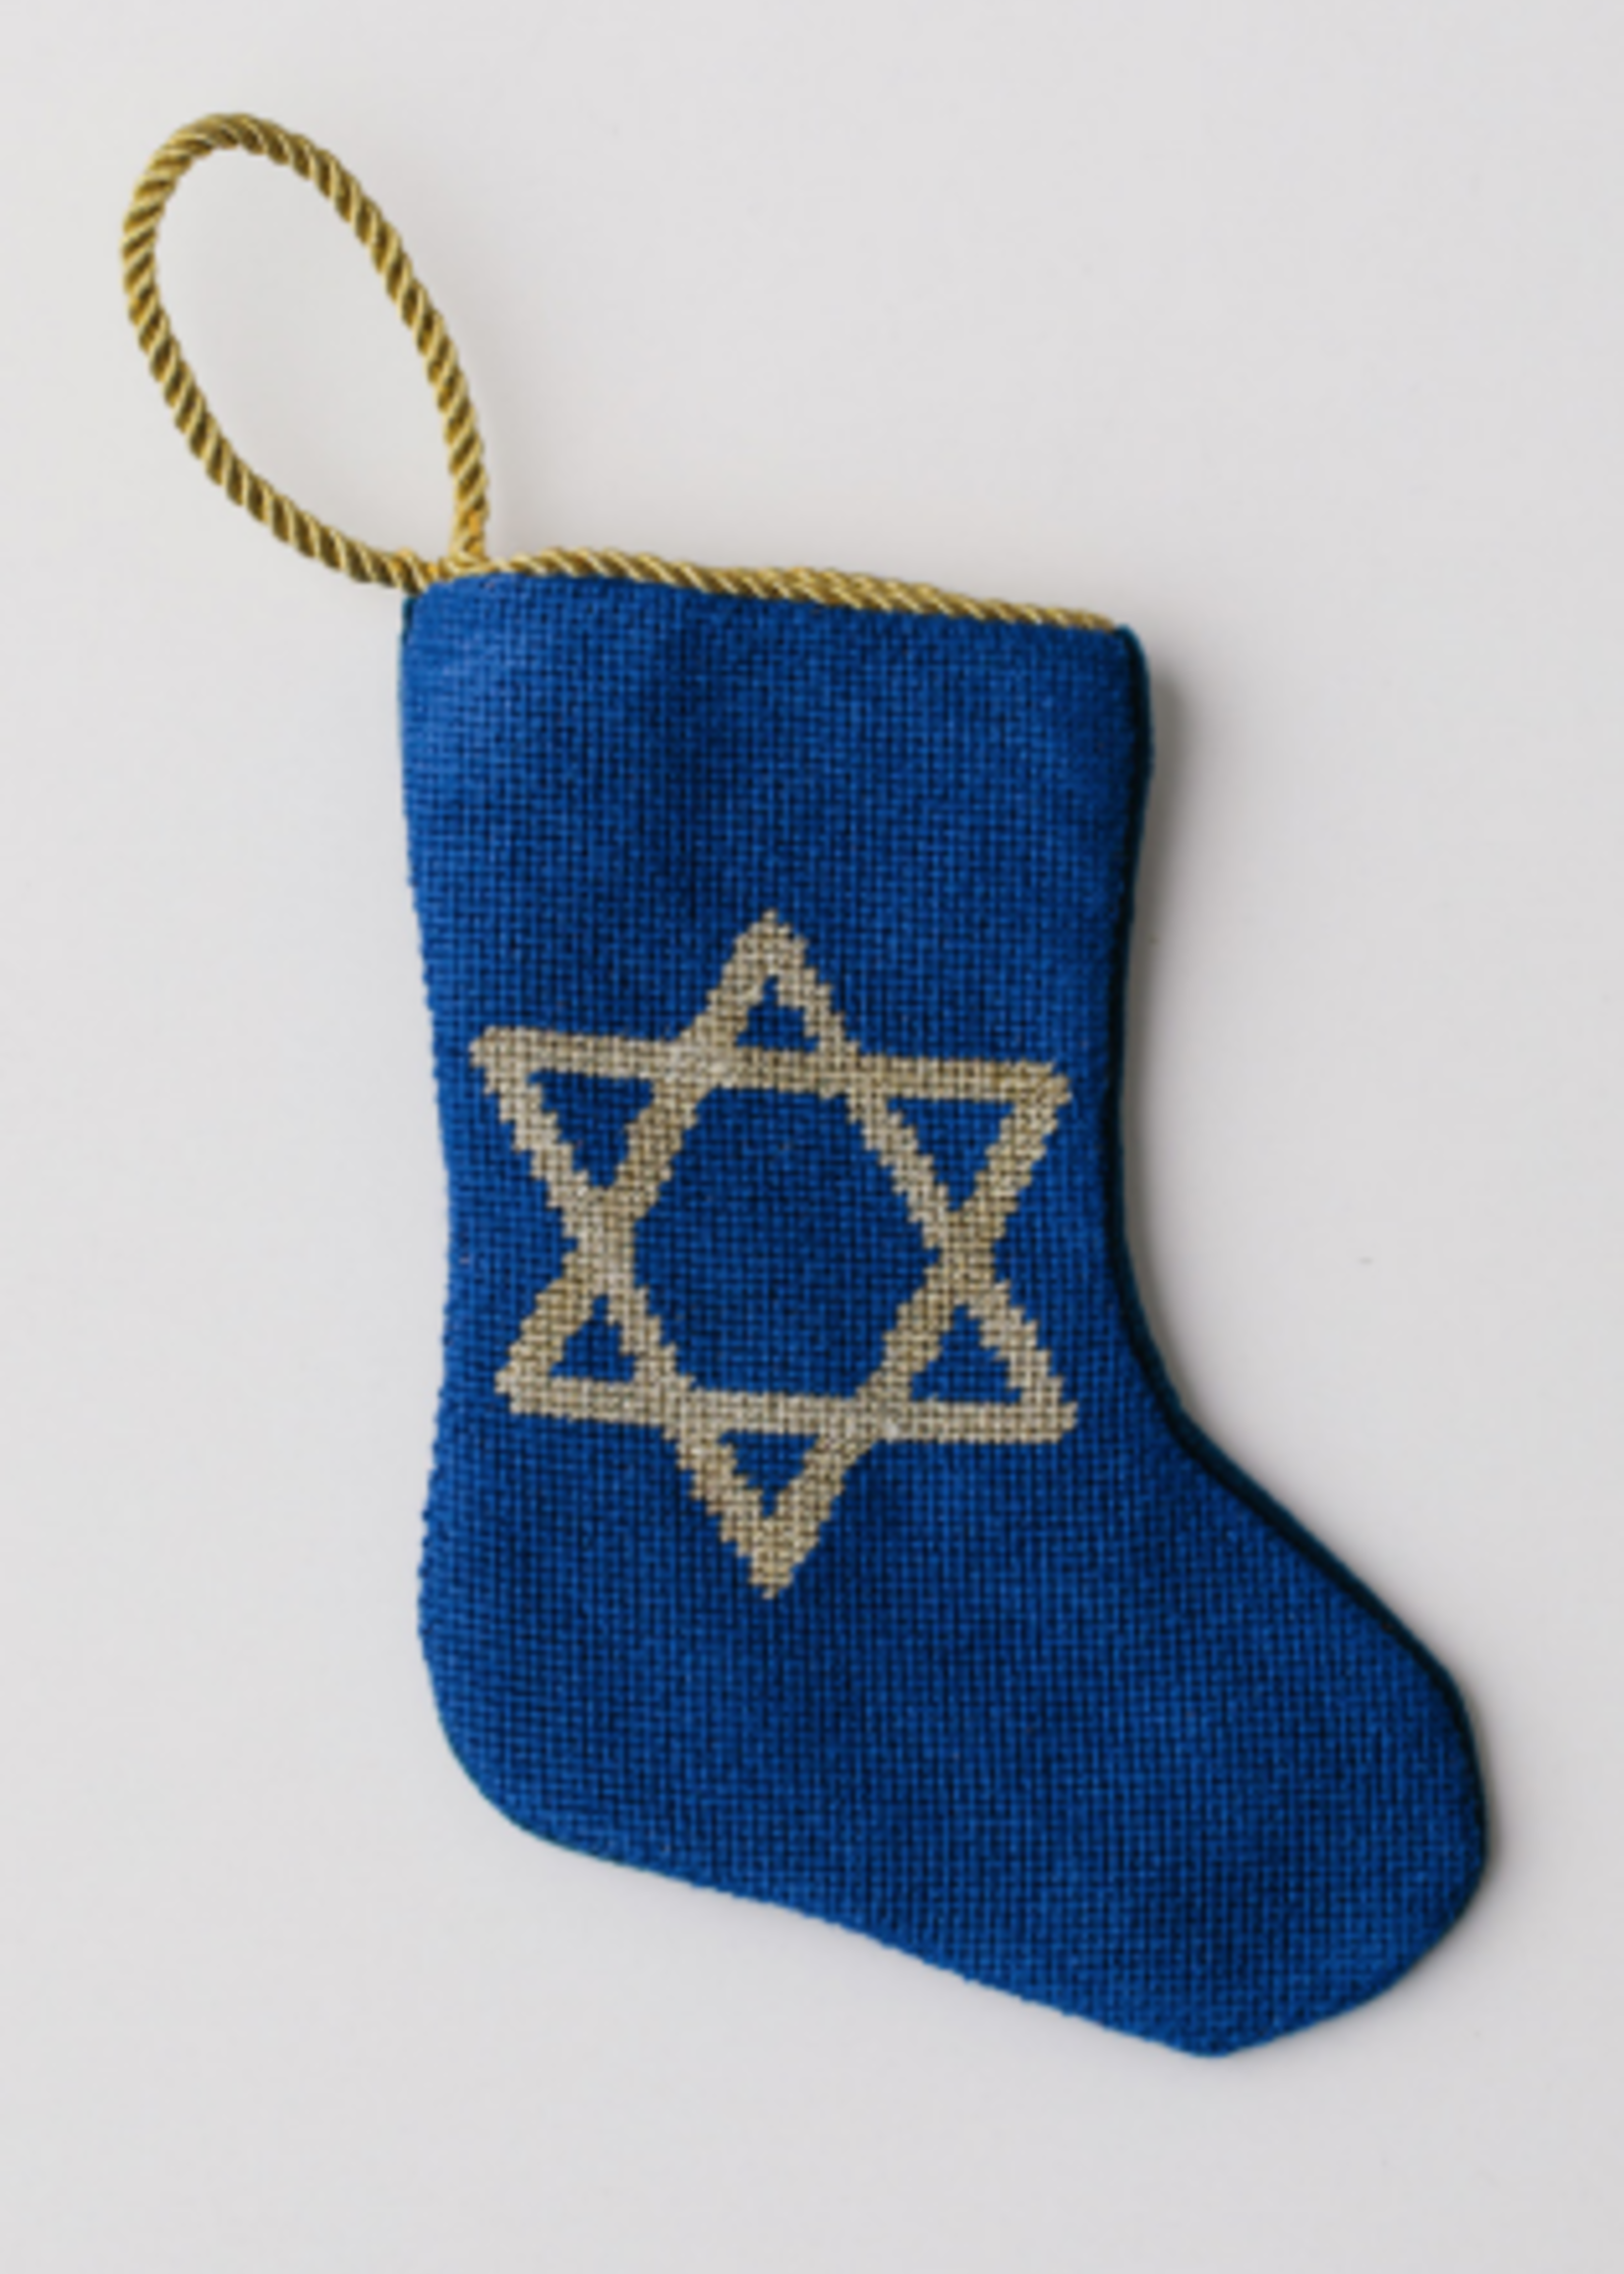 Bauble Stockings Bauble Stocking Happy Hanukkah